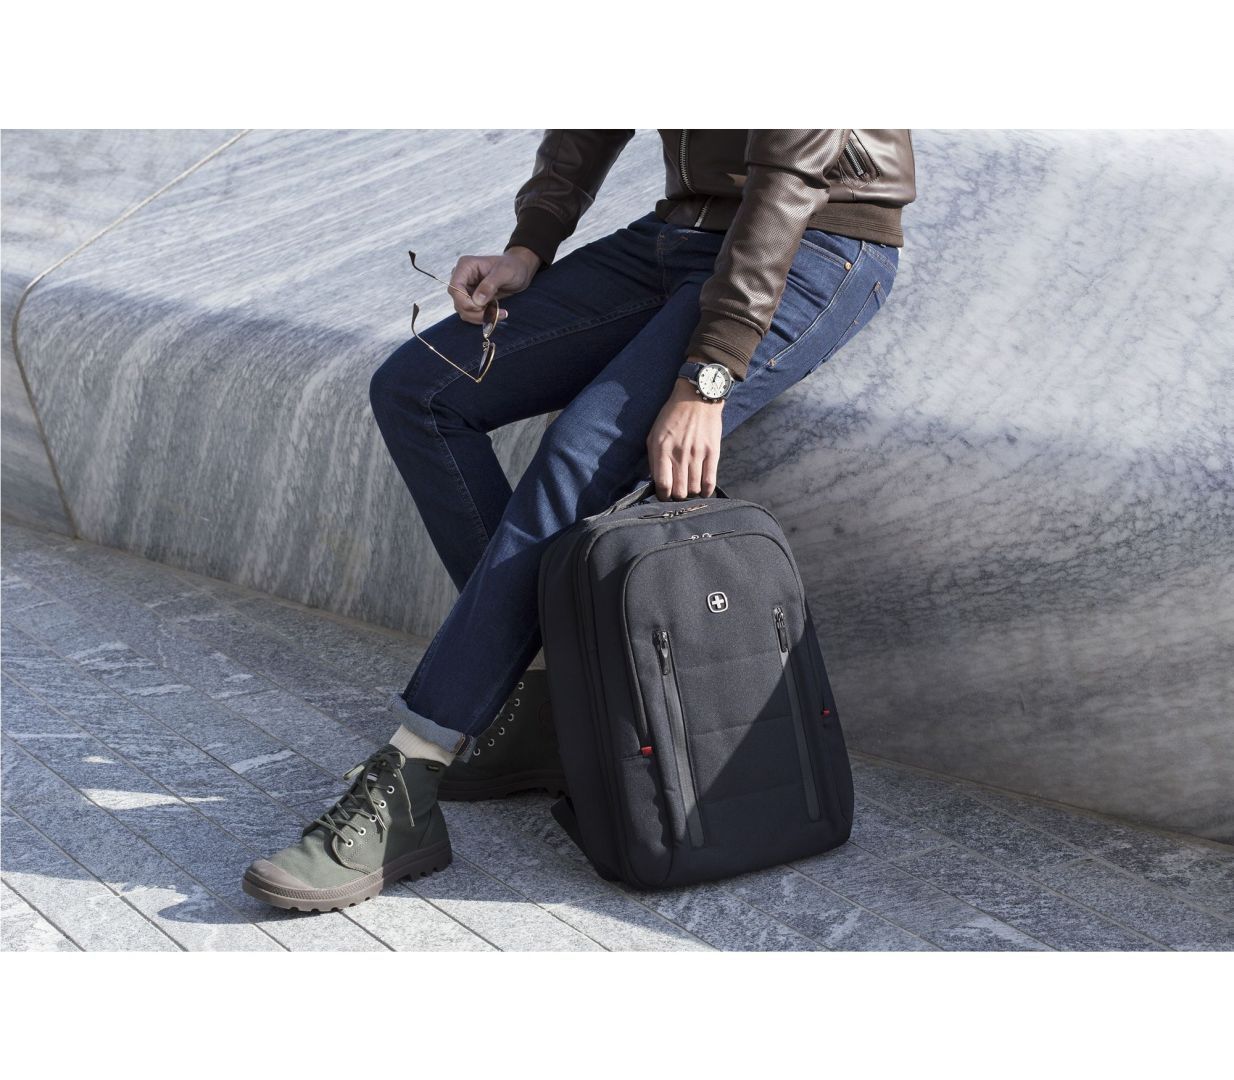 Wenger Carry-On 16'' Backpack with Tablet Pocket Black